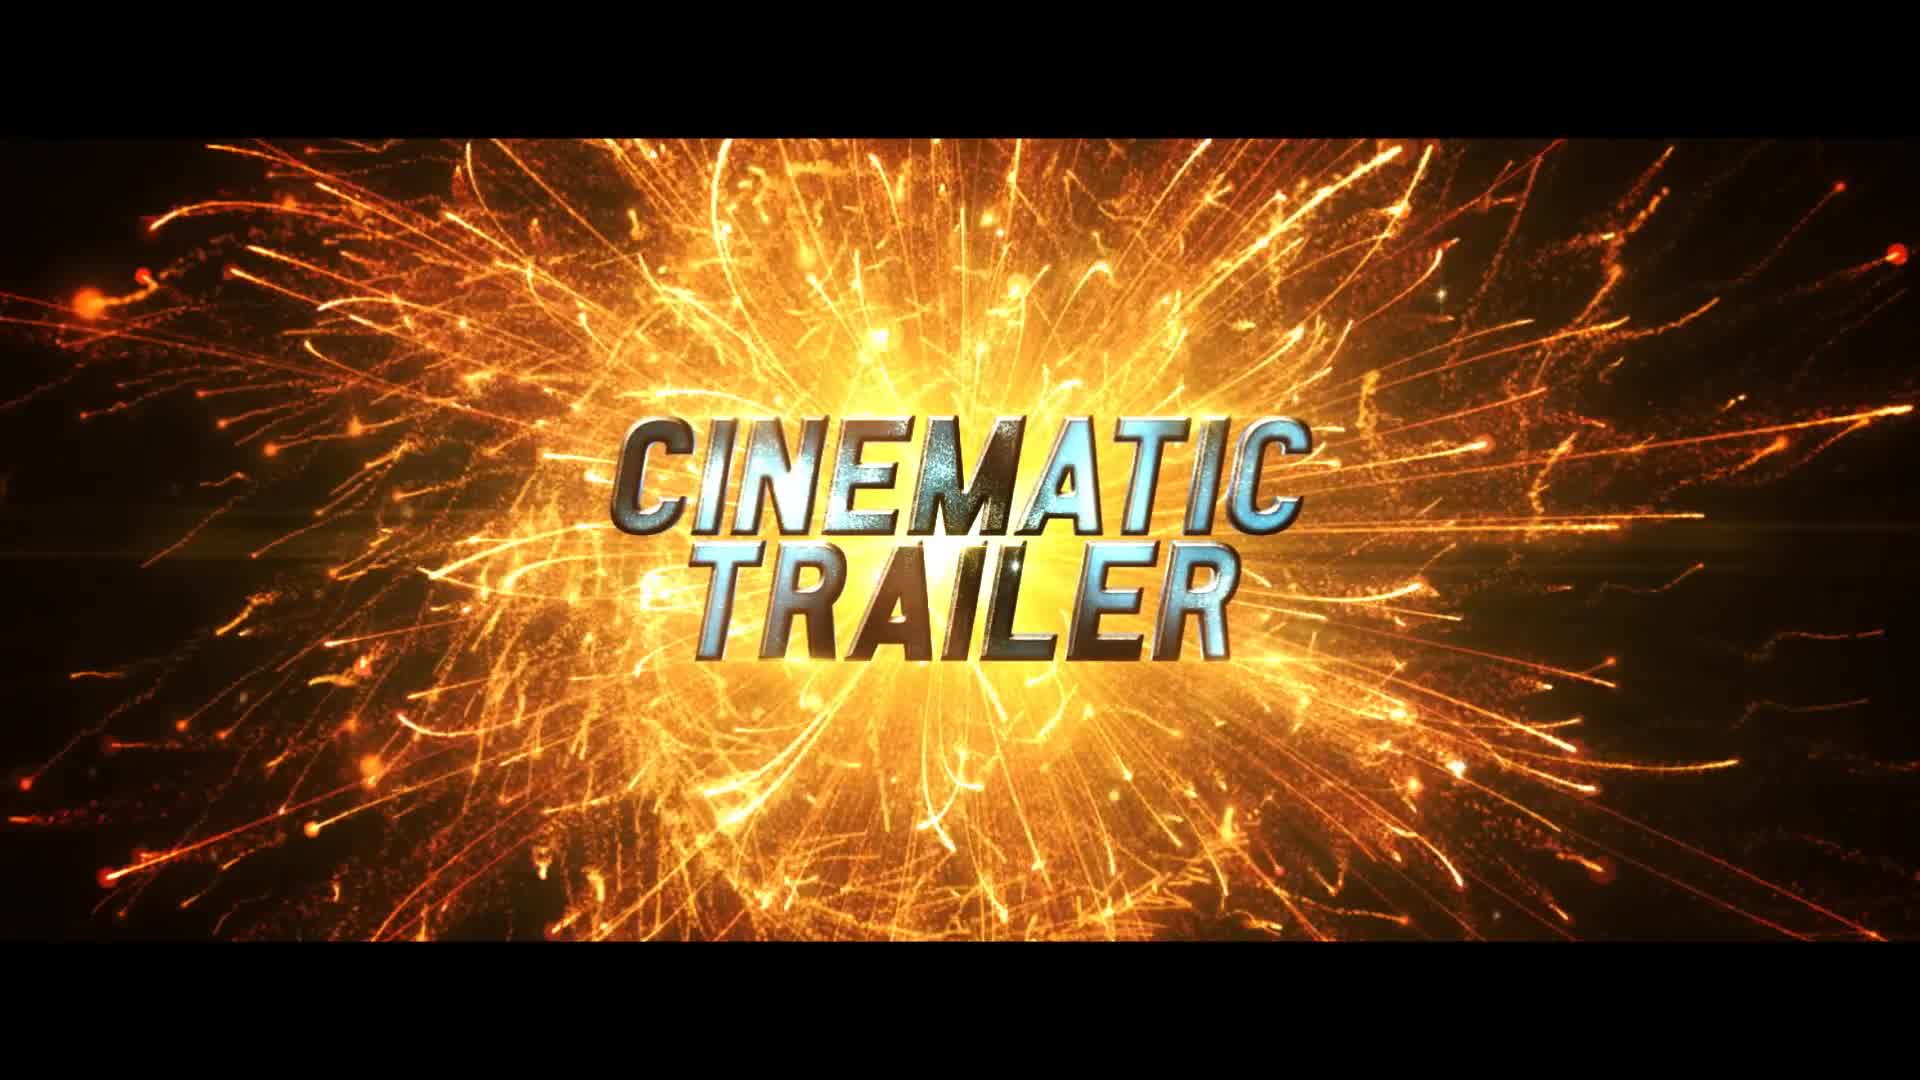 Cinematic Trailer - Download Videohive 22968905